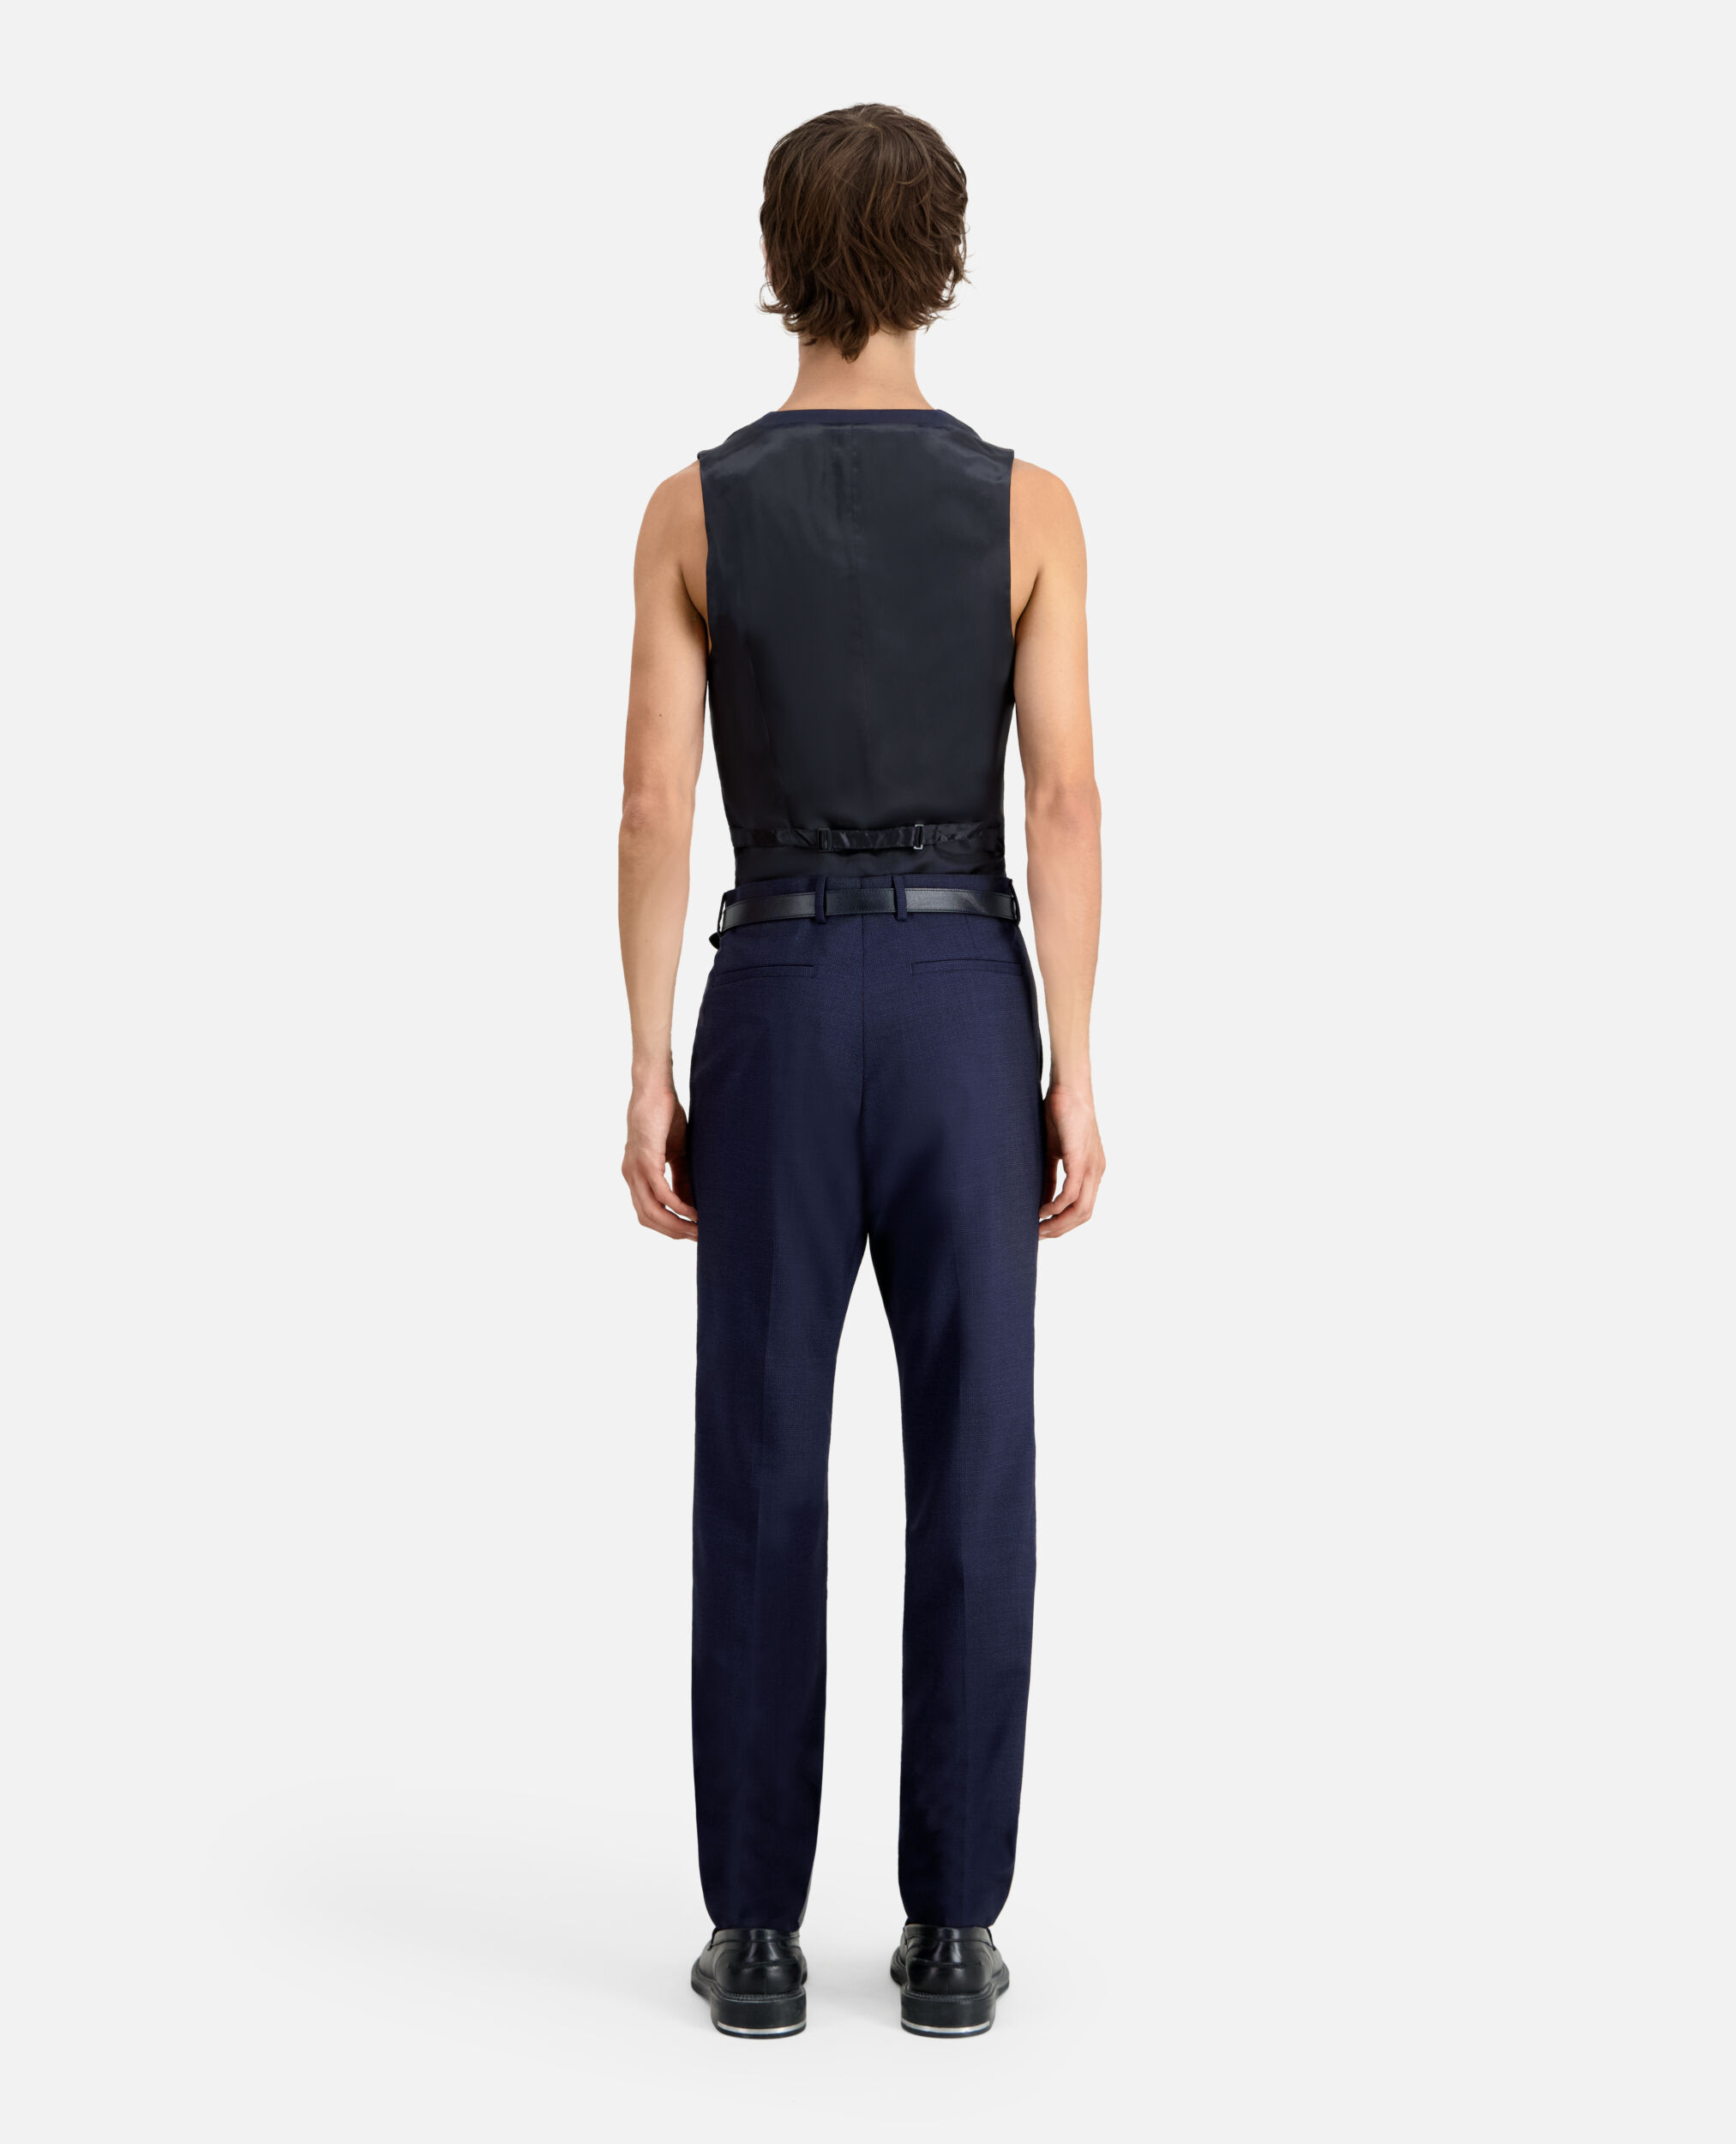 Pantalón traje azul marino lana micromotivos, NAVY / BLACK, hi-res image number null